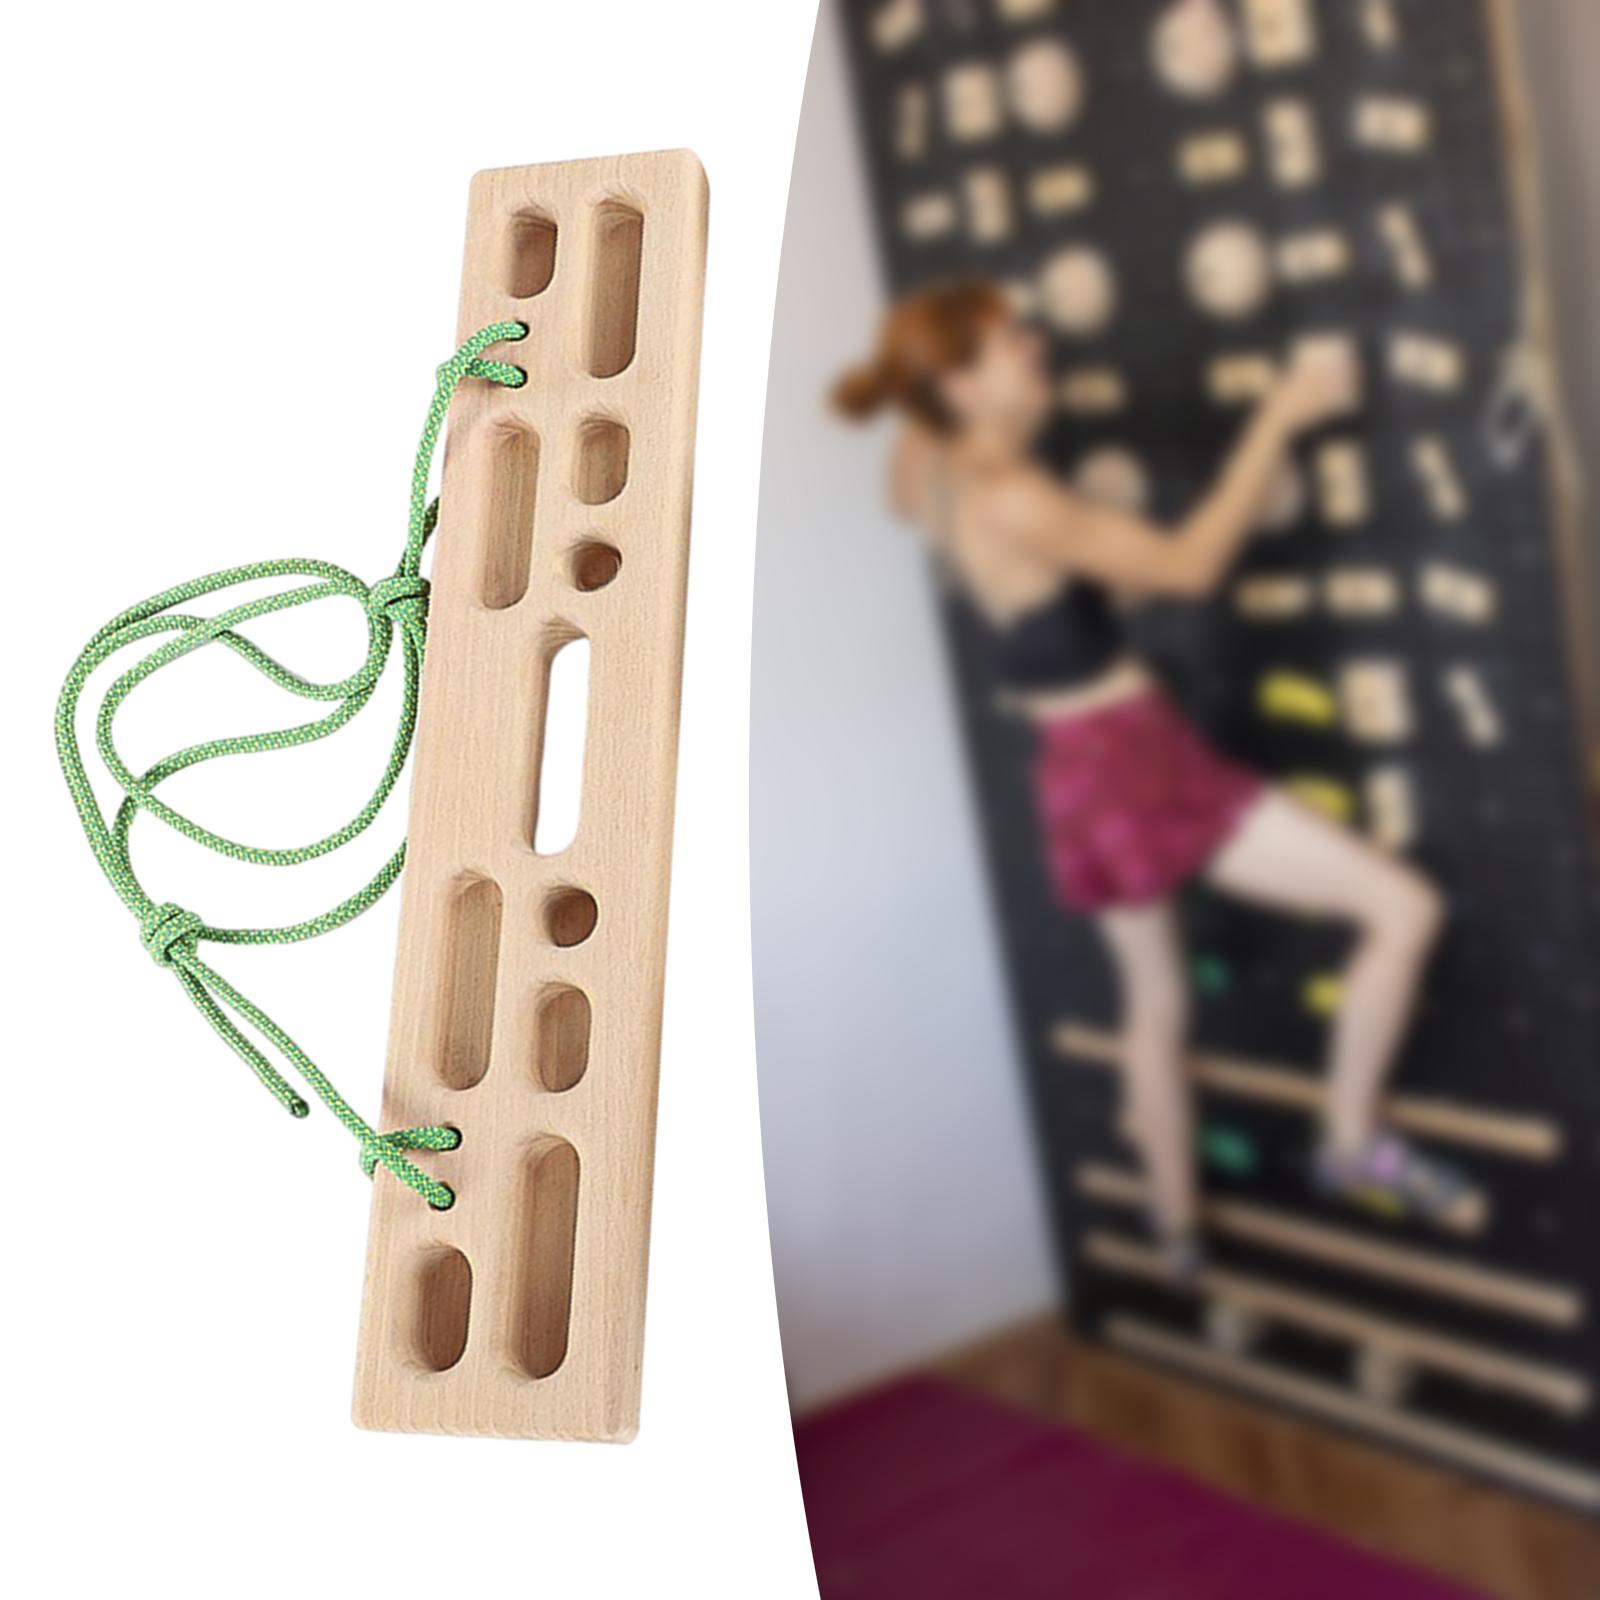 Baoblaze Climbing Hangboard Fingerboard Wooden Hang Board for Outdoor